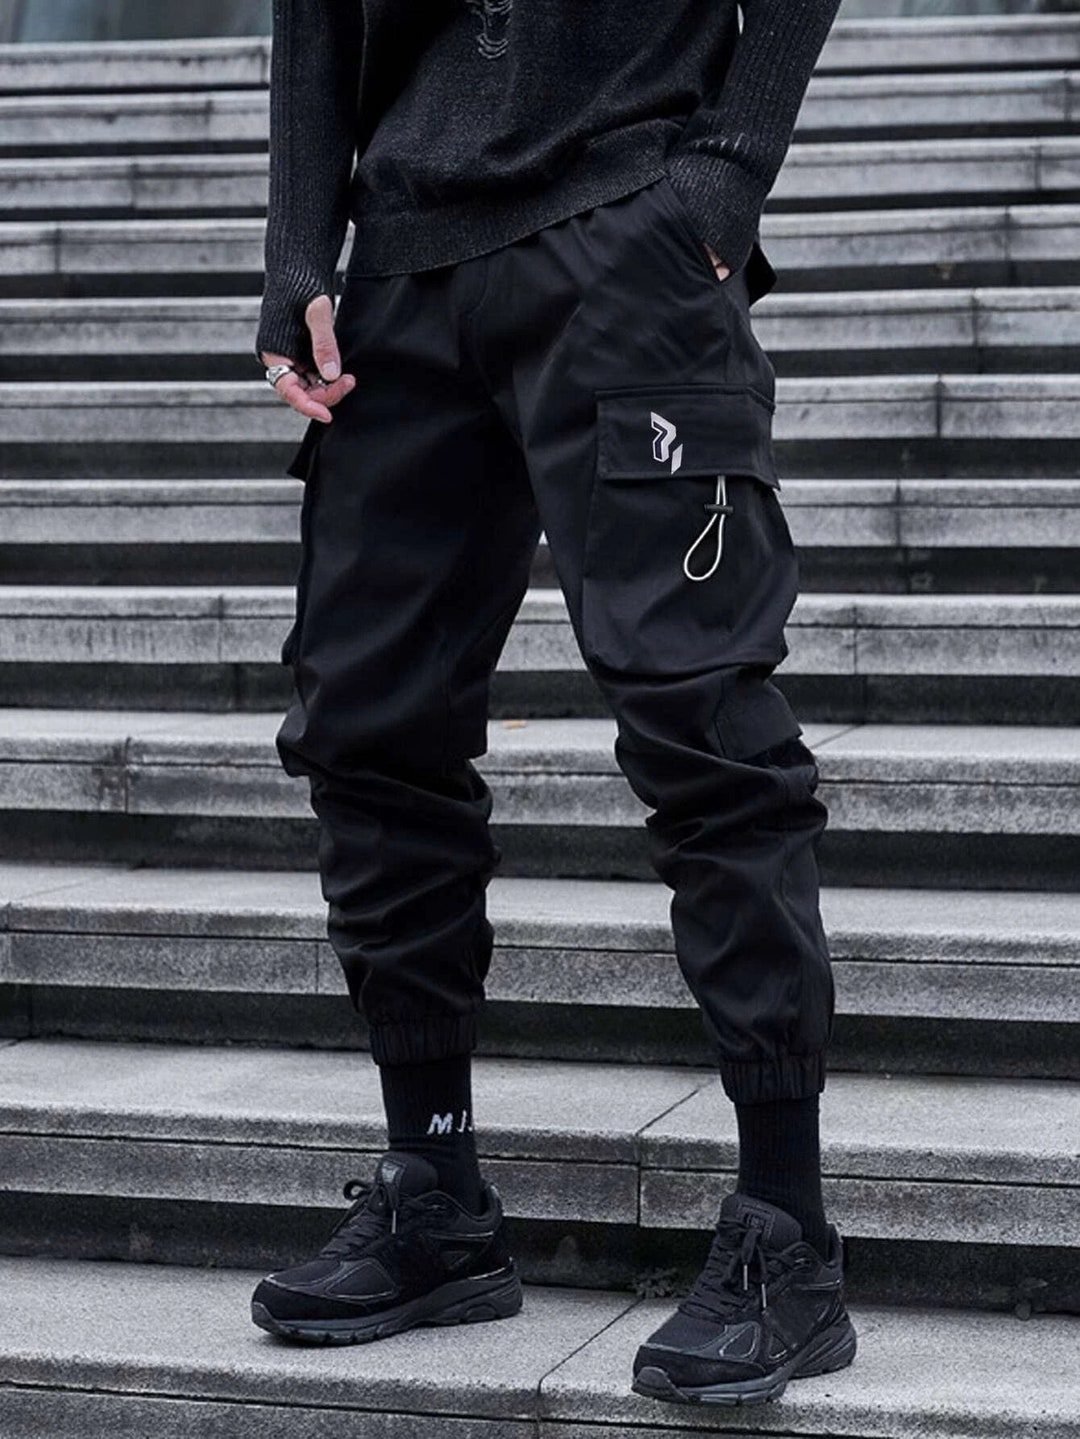 Men's Black Joggers Streetwear Fashion Pants Gift for - Etsy